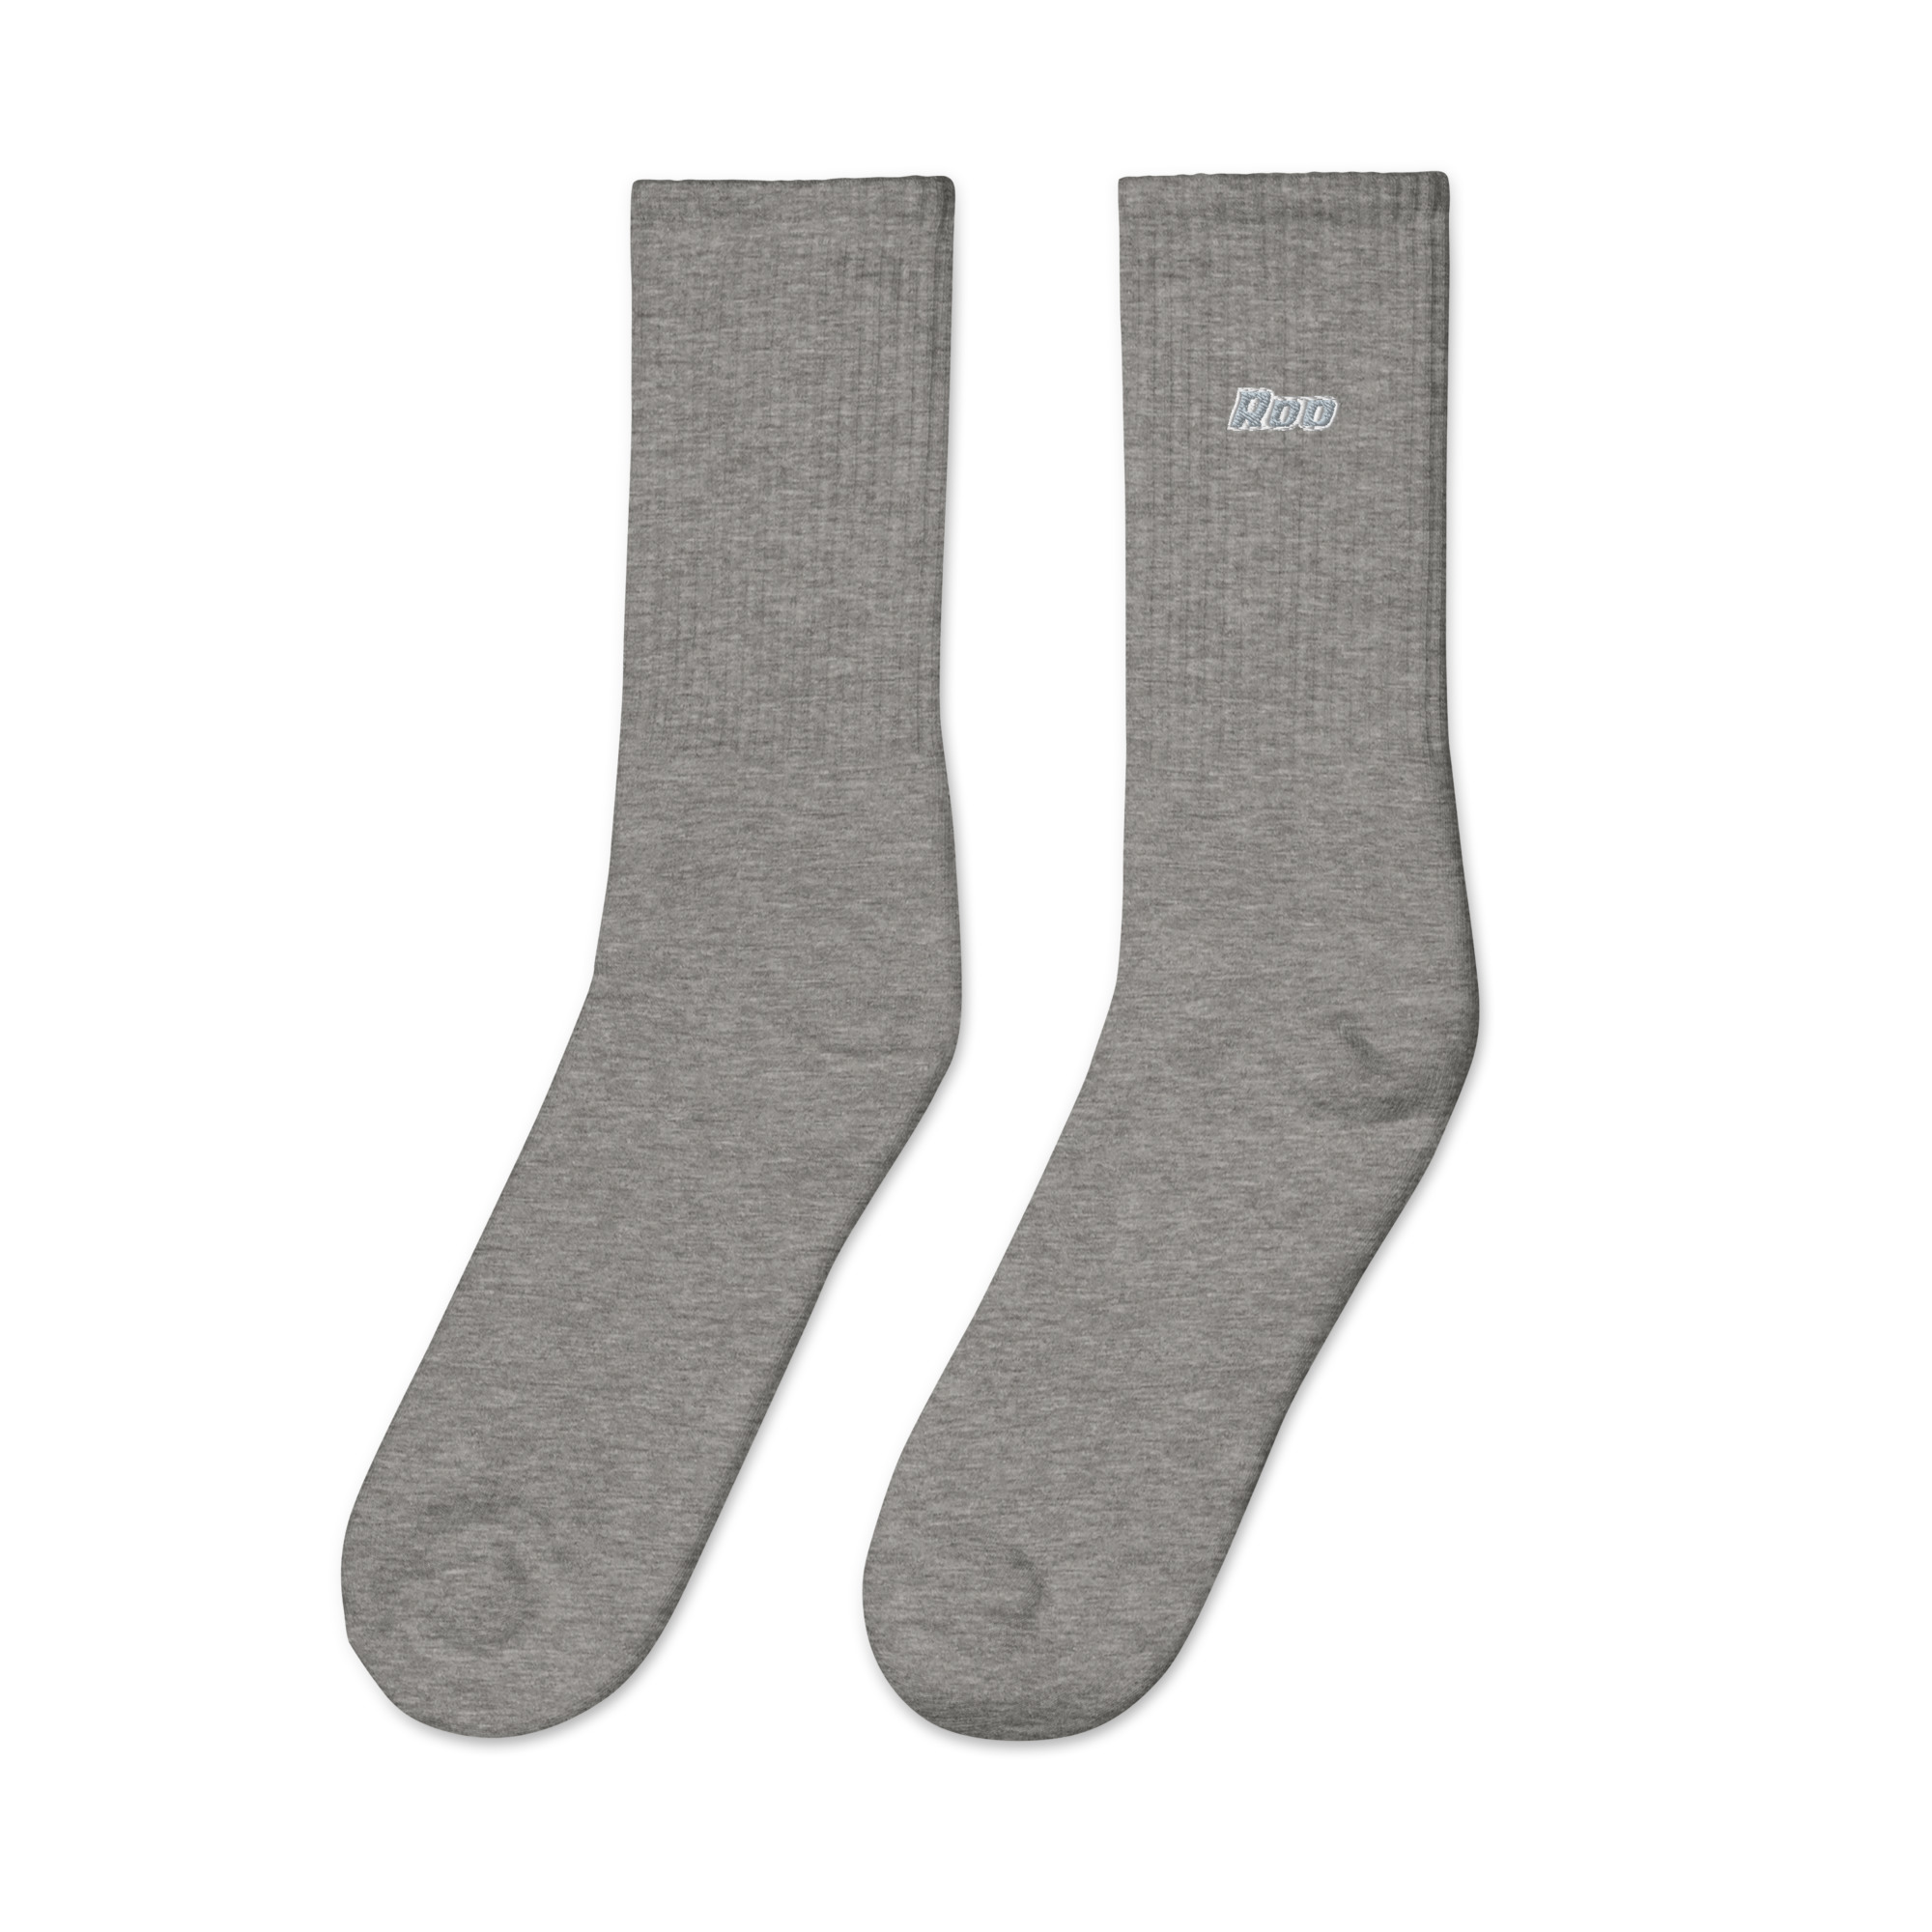 embroidered-crew-socks-heather-grey-left-6542837f90235.jpg